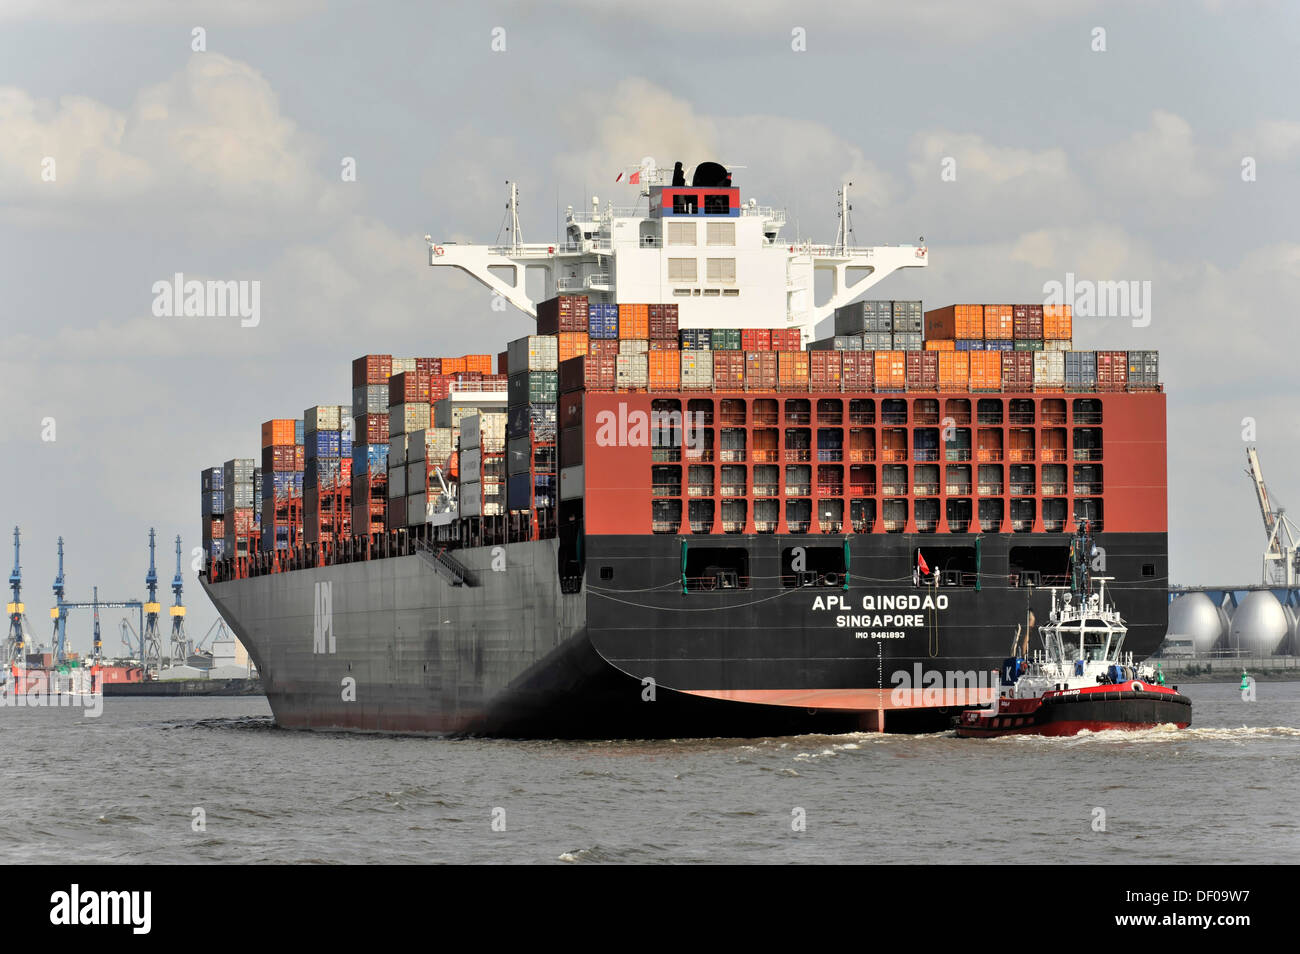 APL QINGDAO container ship, 349 m long, built in 2012, arriving, port of Hamburg, Hamburg Stock Photo